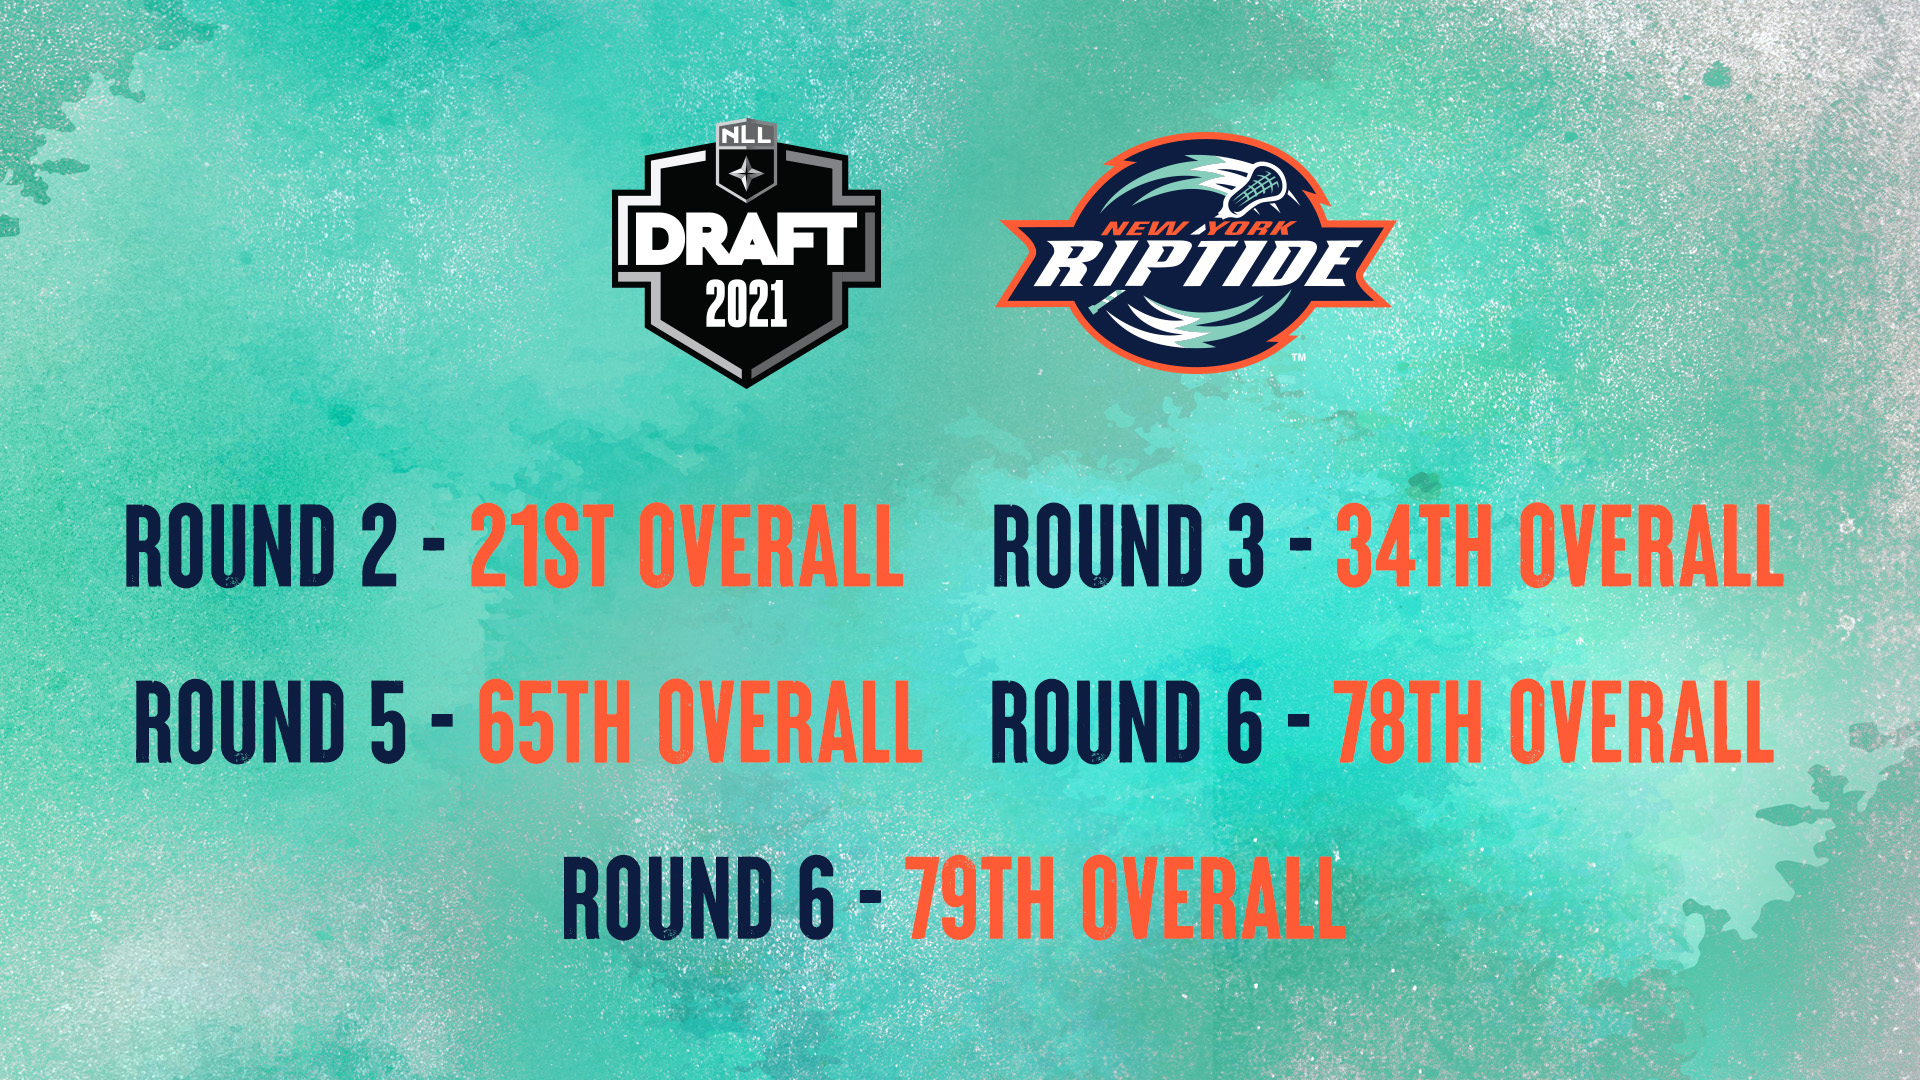 New York Riptide Select Eight In 2022 NLL Entry Draft - New York Riptide